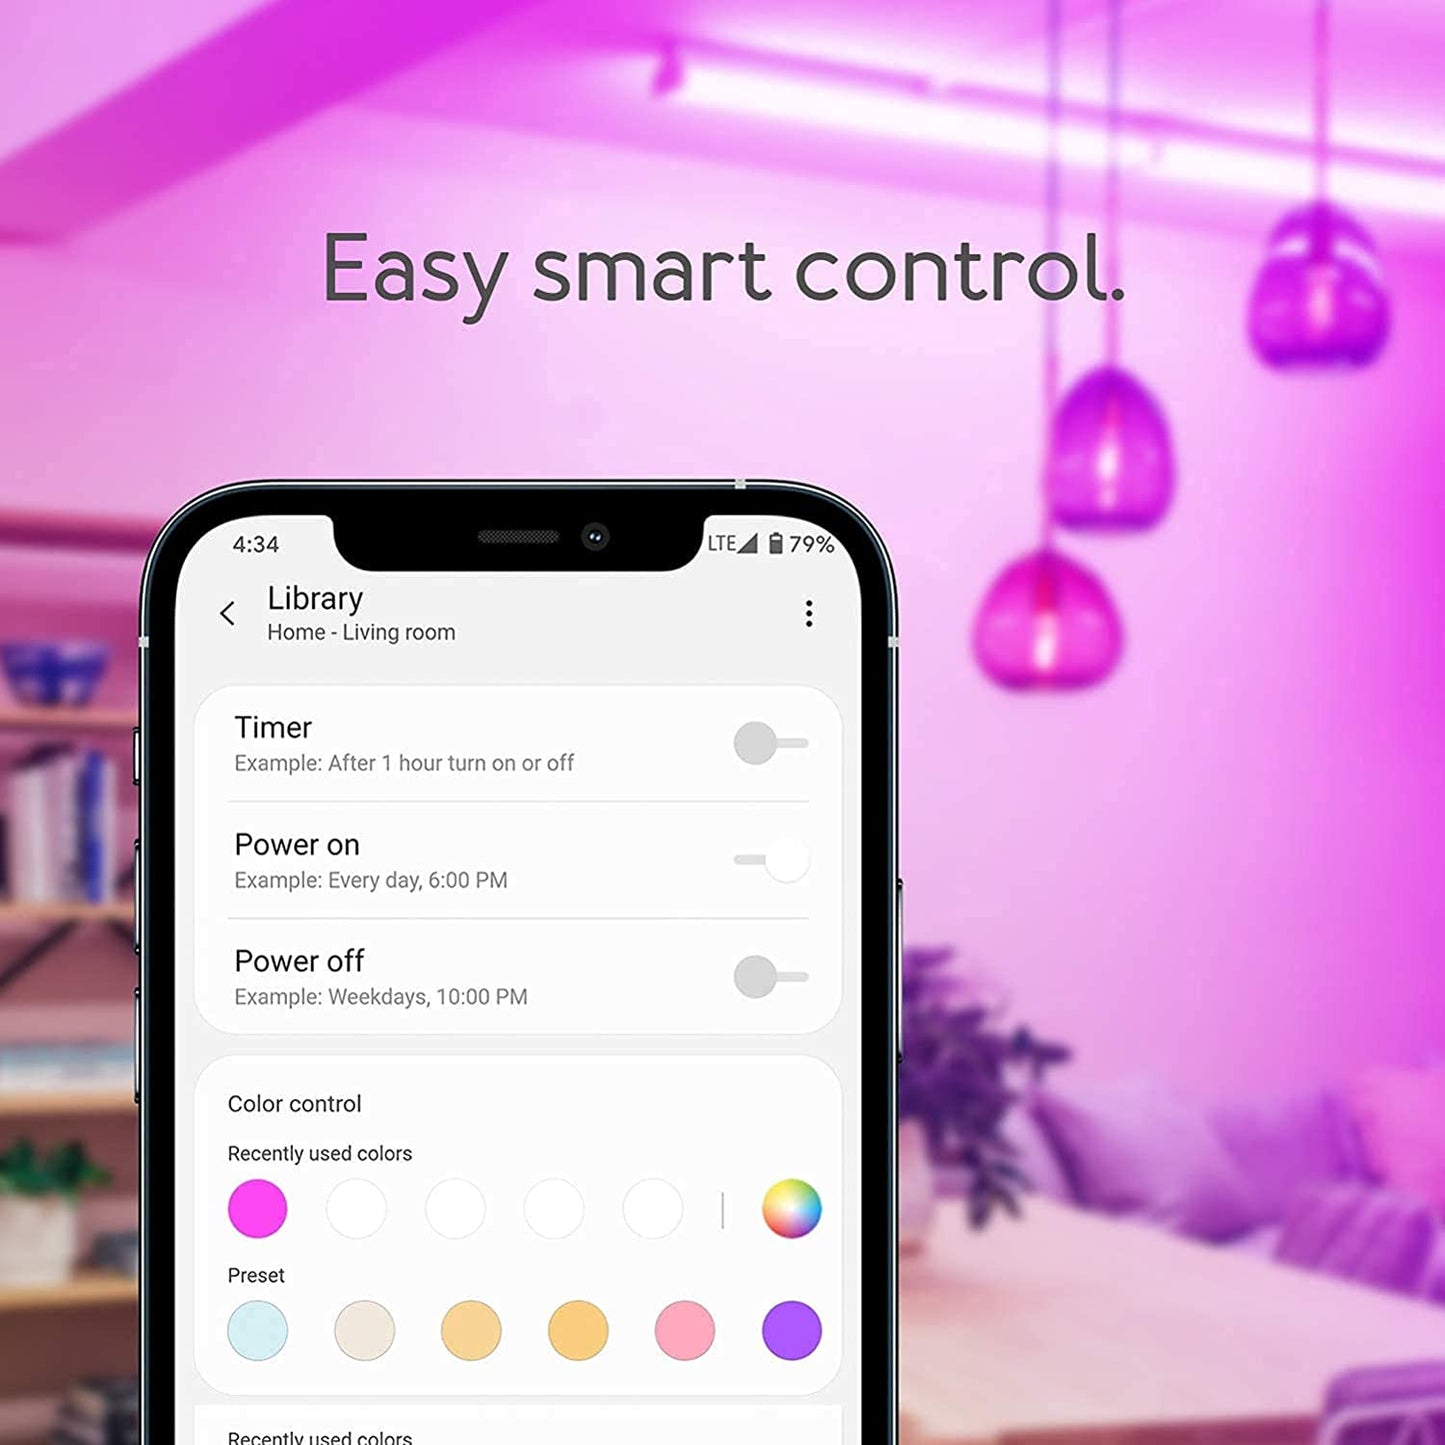 Aeotec Smart Home SmartThings Hub (OPEN BOX)